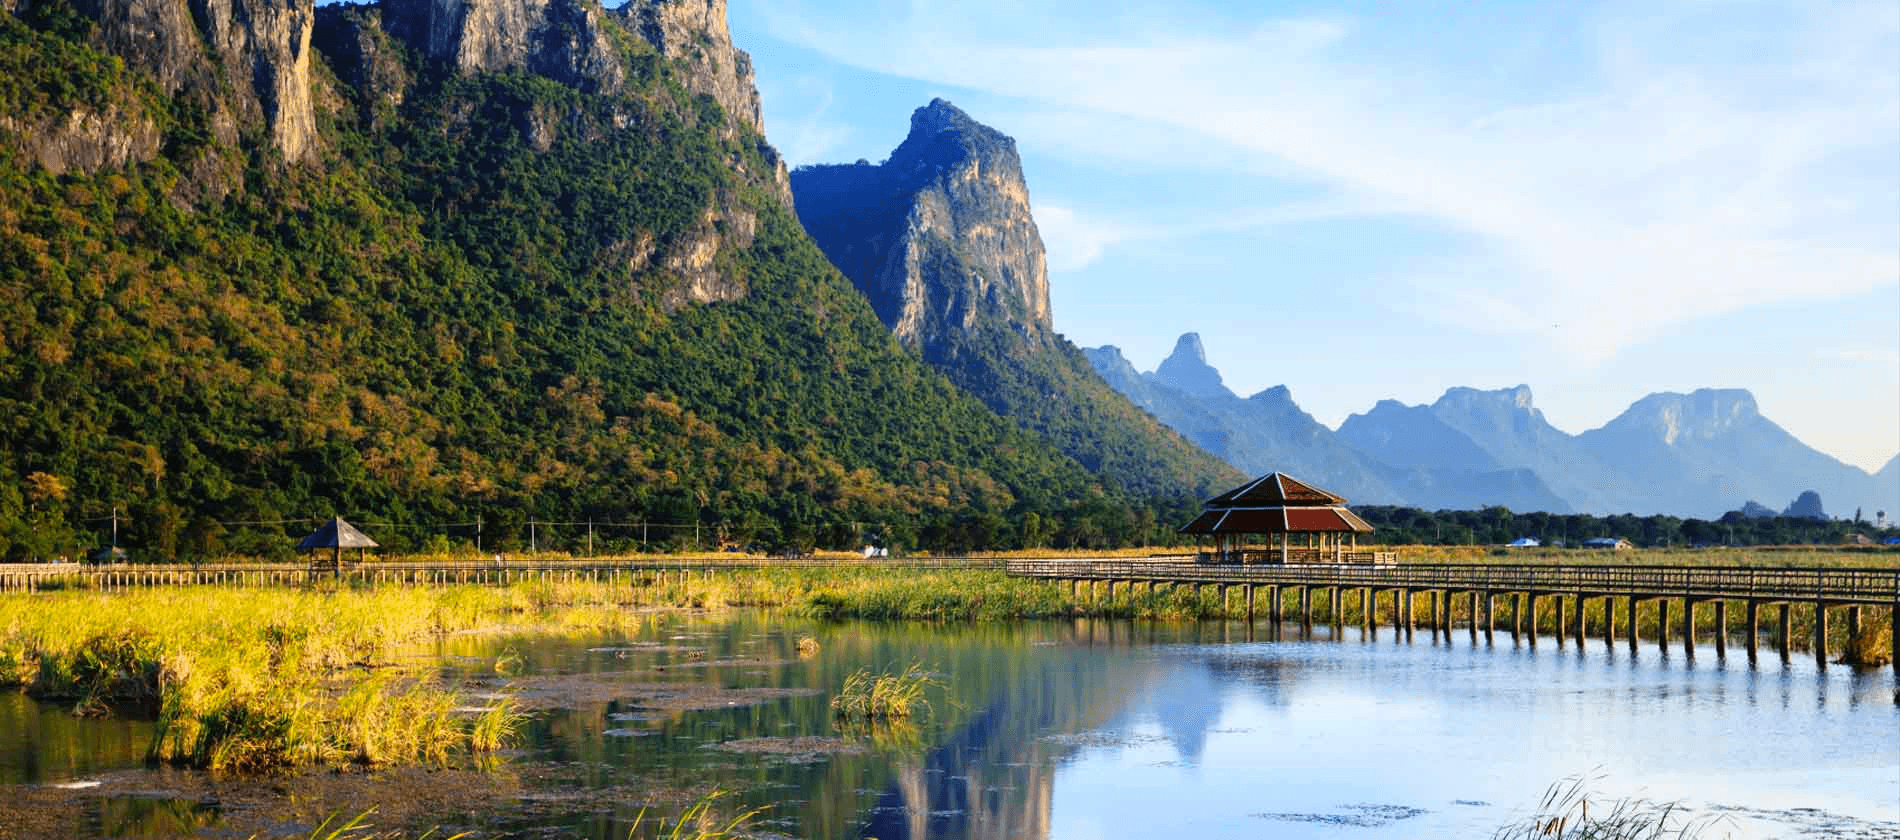 Source: Thai National Parks